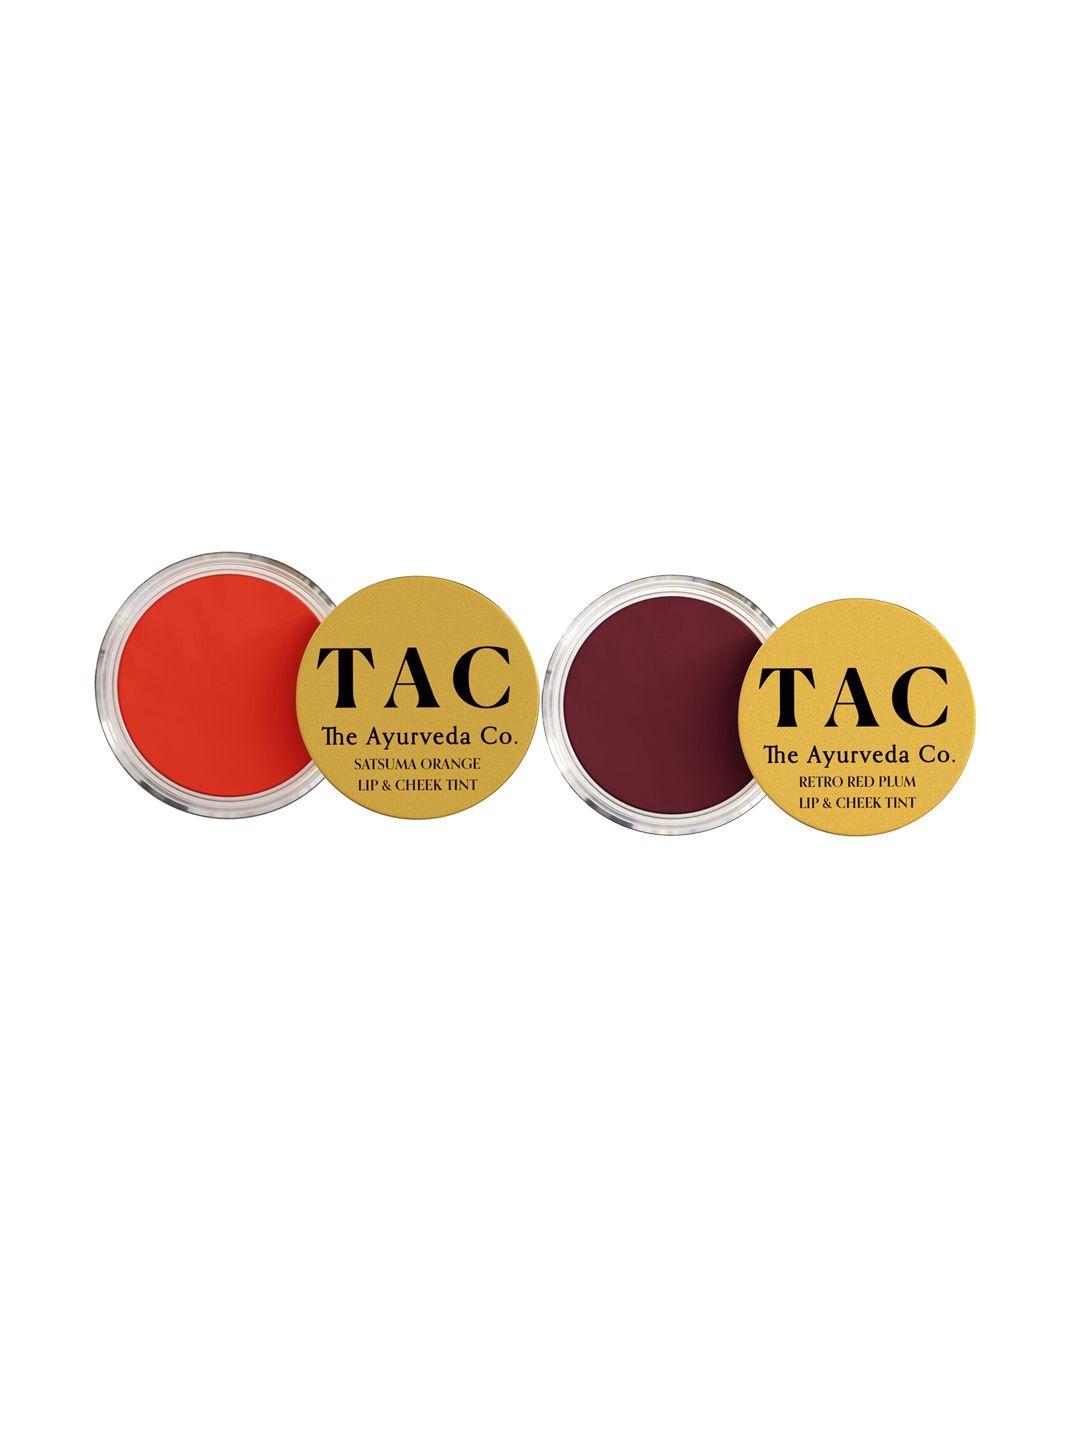 tac - the ayurveda co. set of 2 lip & cheek tint - satsuma orange & retro red pulp